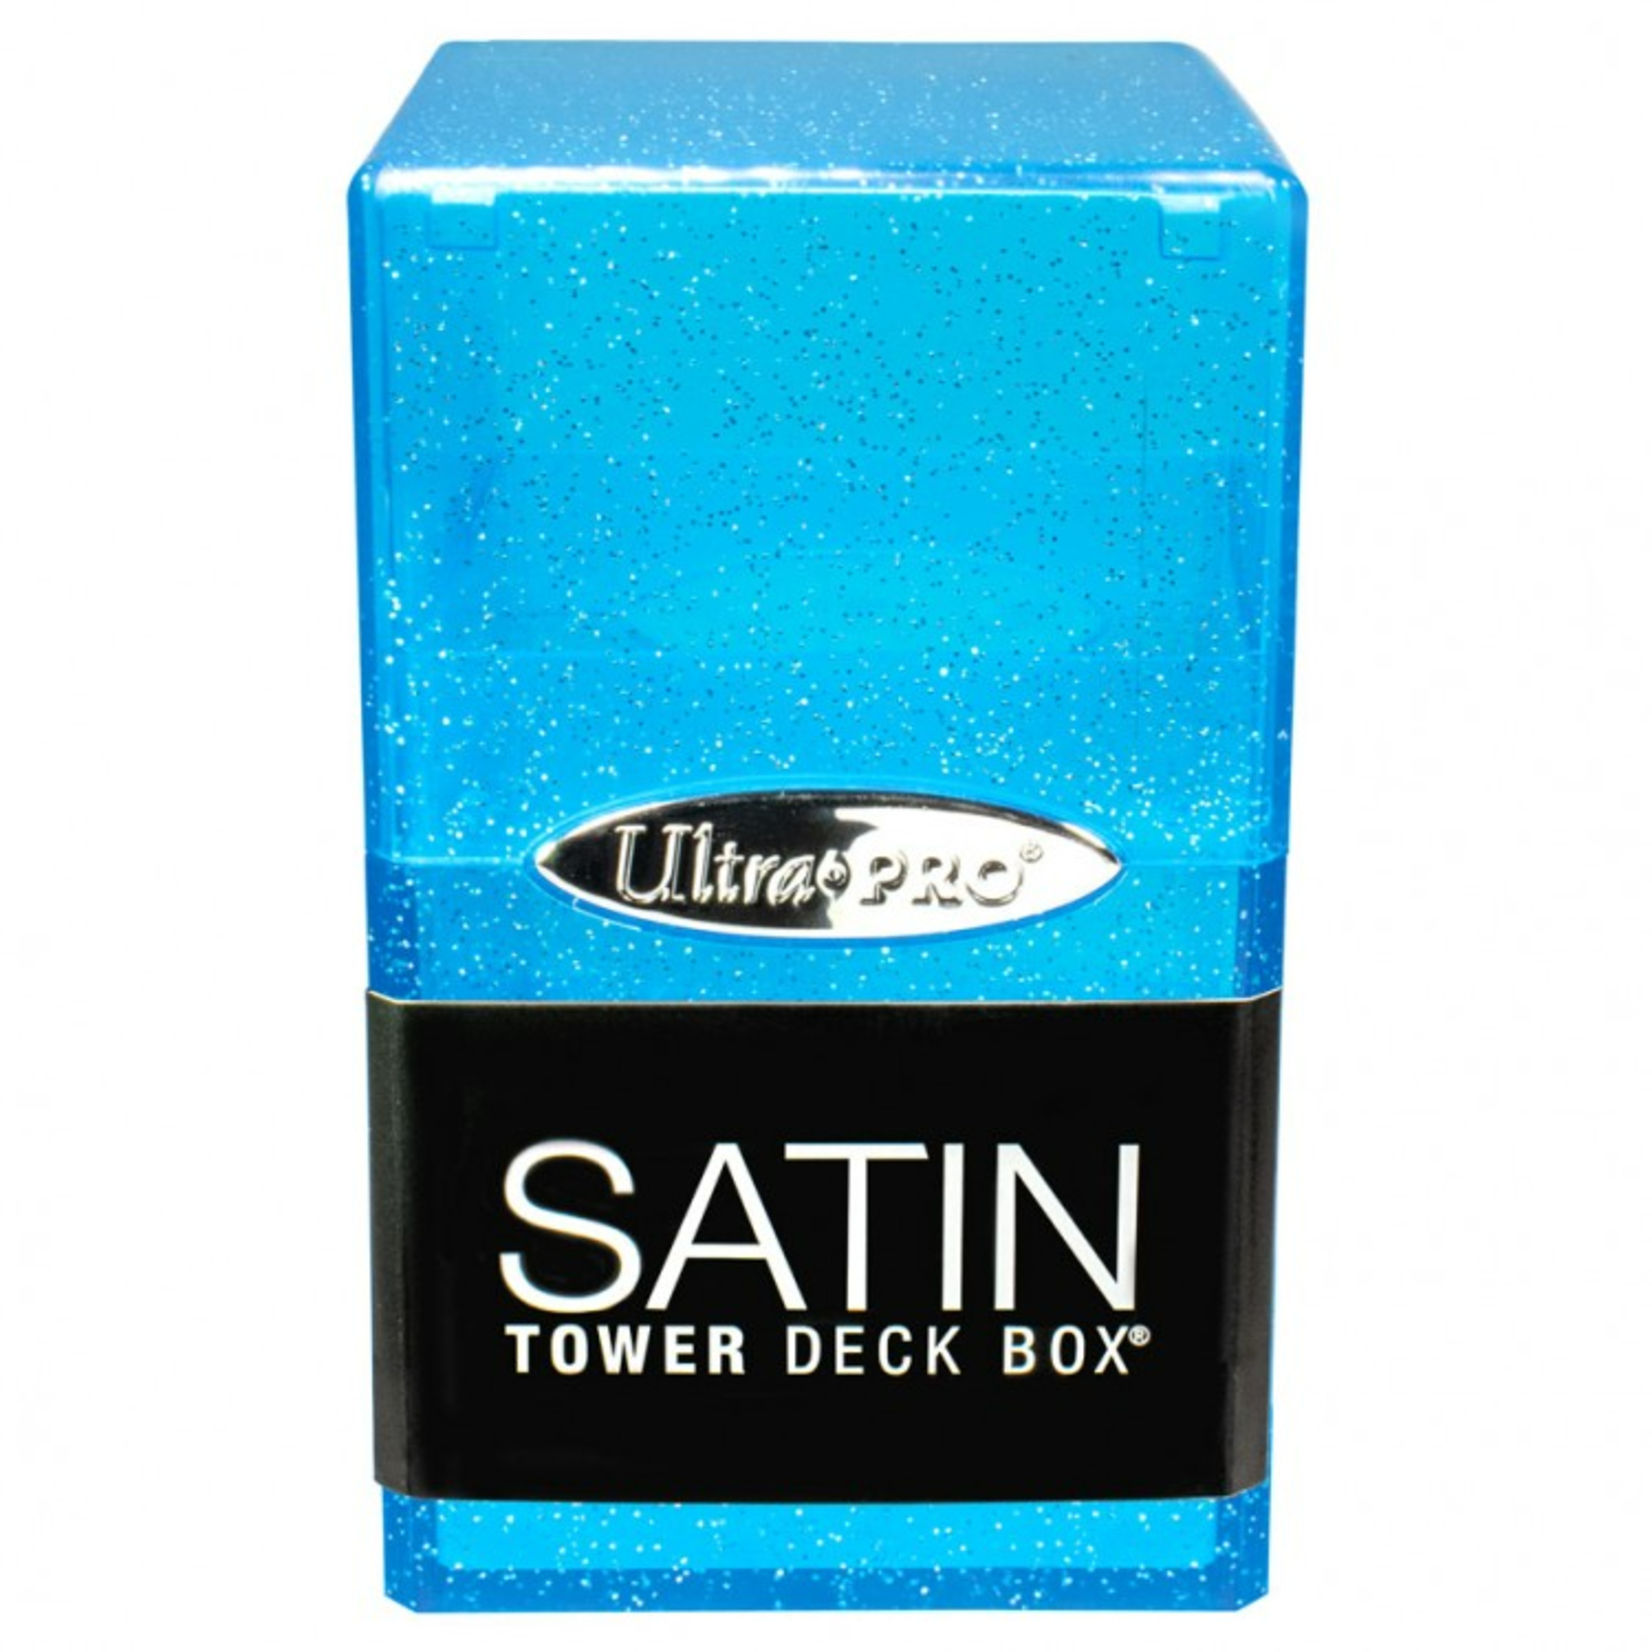 Ultra Pro Ultra Pro Satin Tower Deck Box Glitter Blue